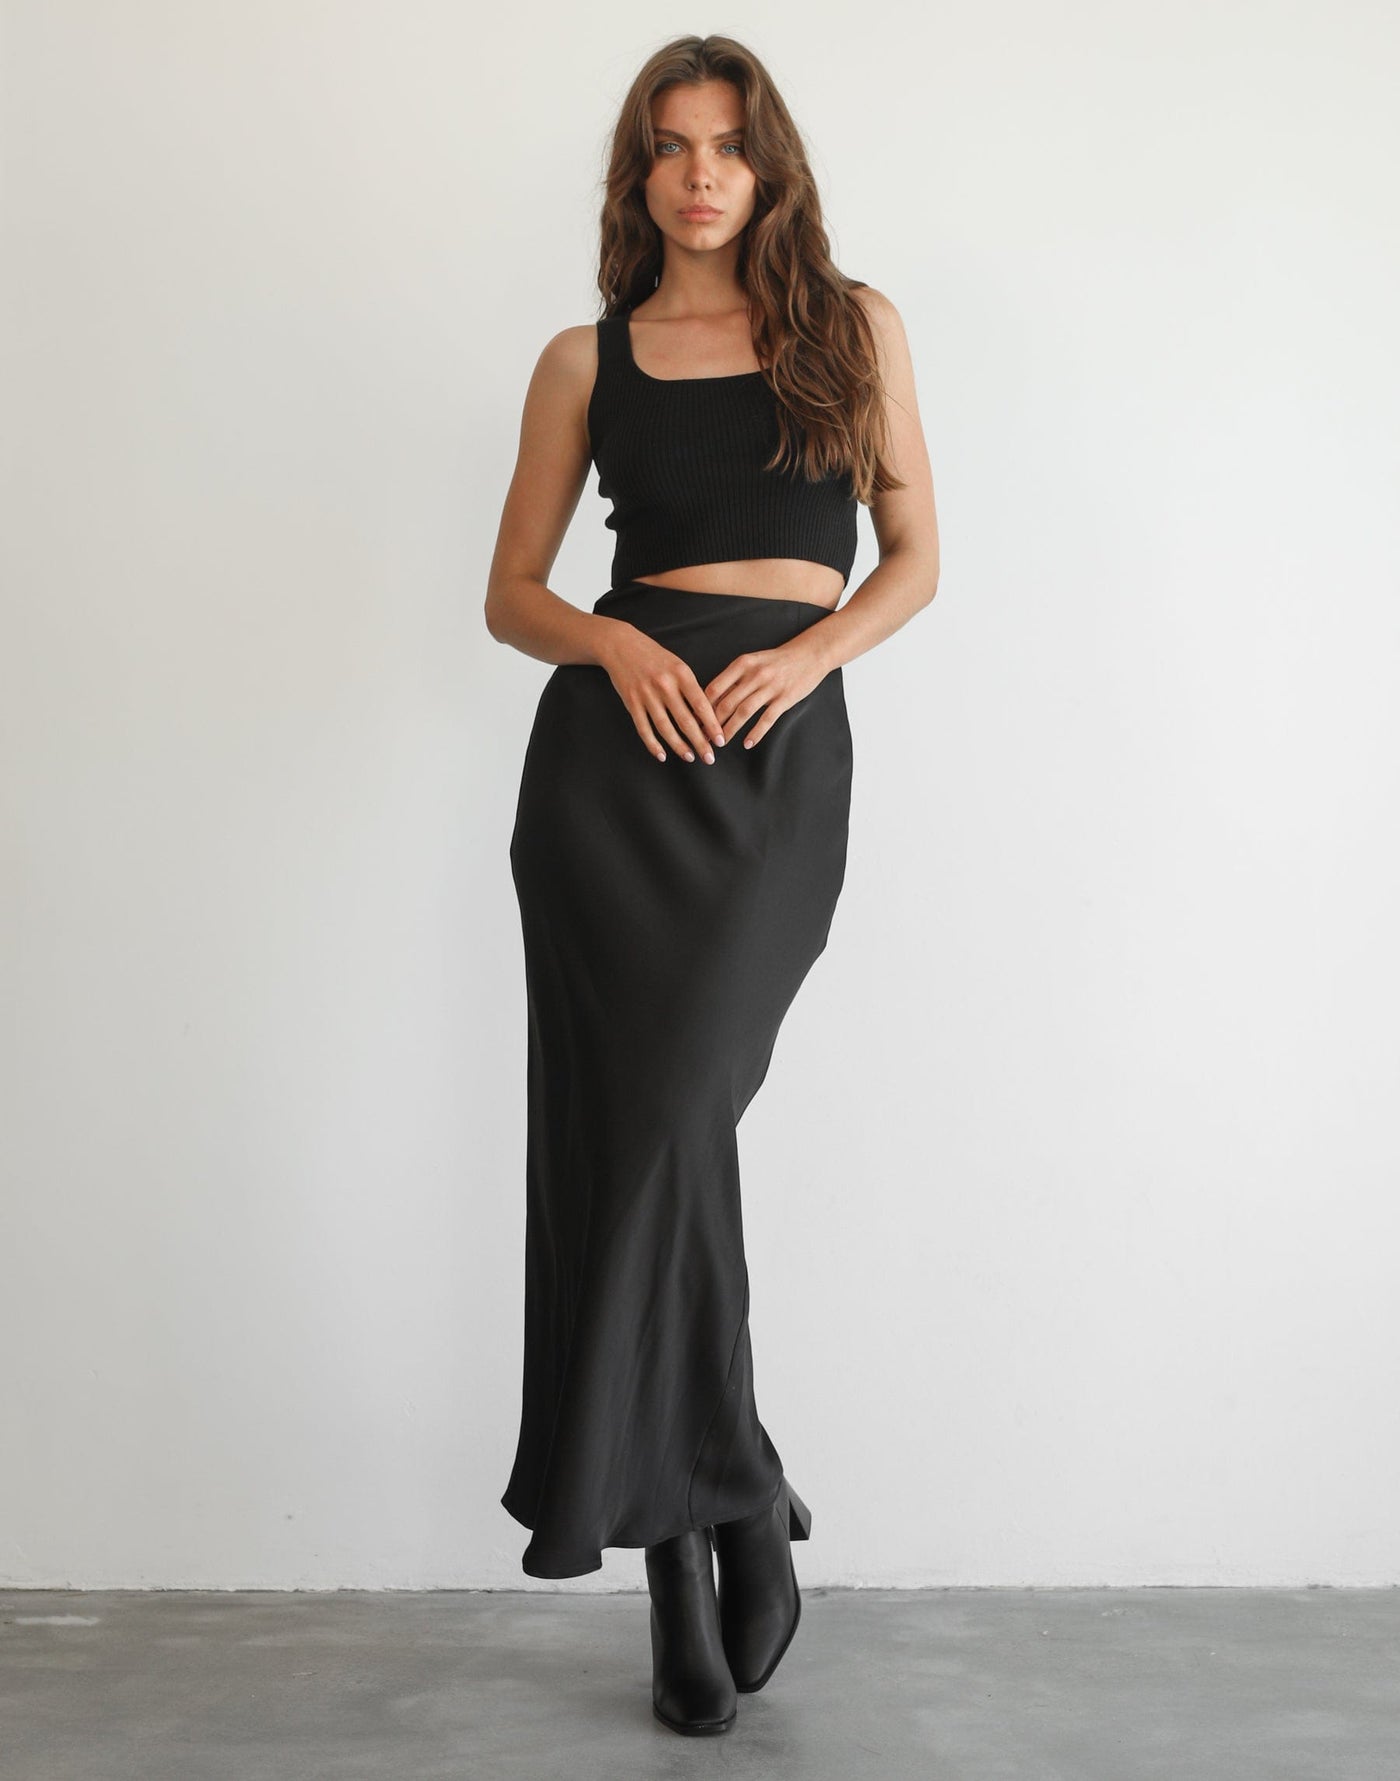 Delaney Top (Black) - Black Top - Women's Top - Charcoal Clothing